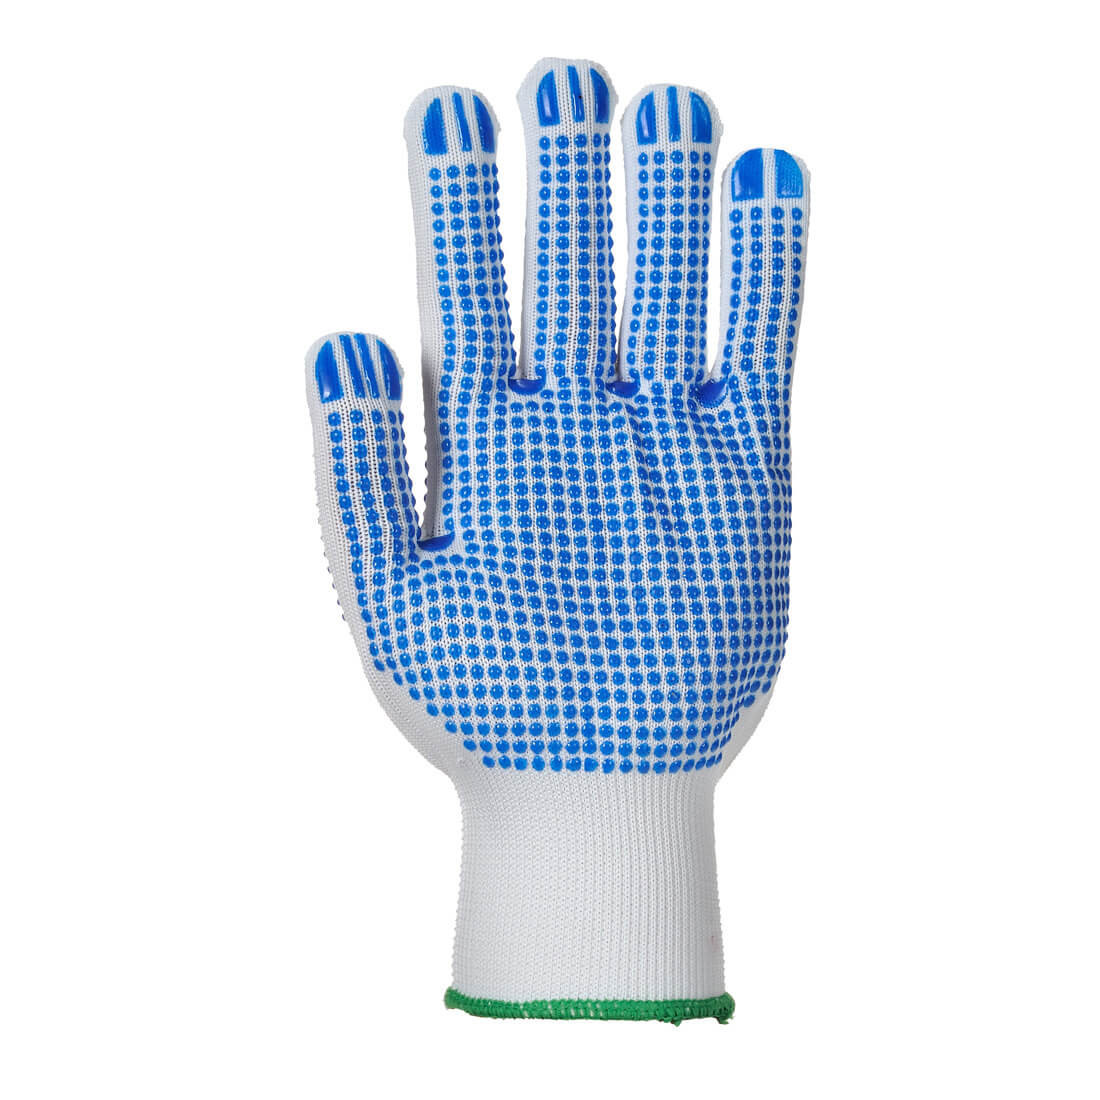 Polka Dot Plus Glove - Personal protection